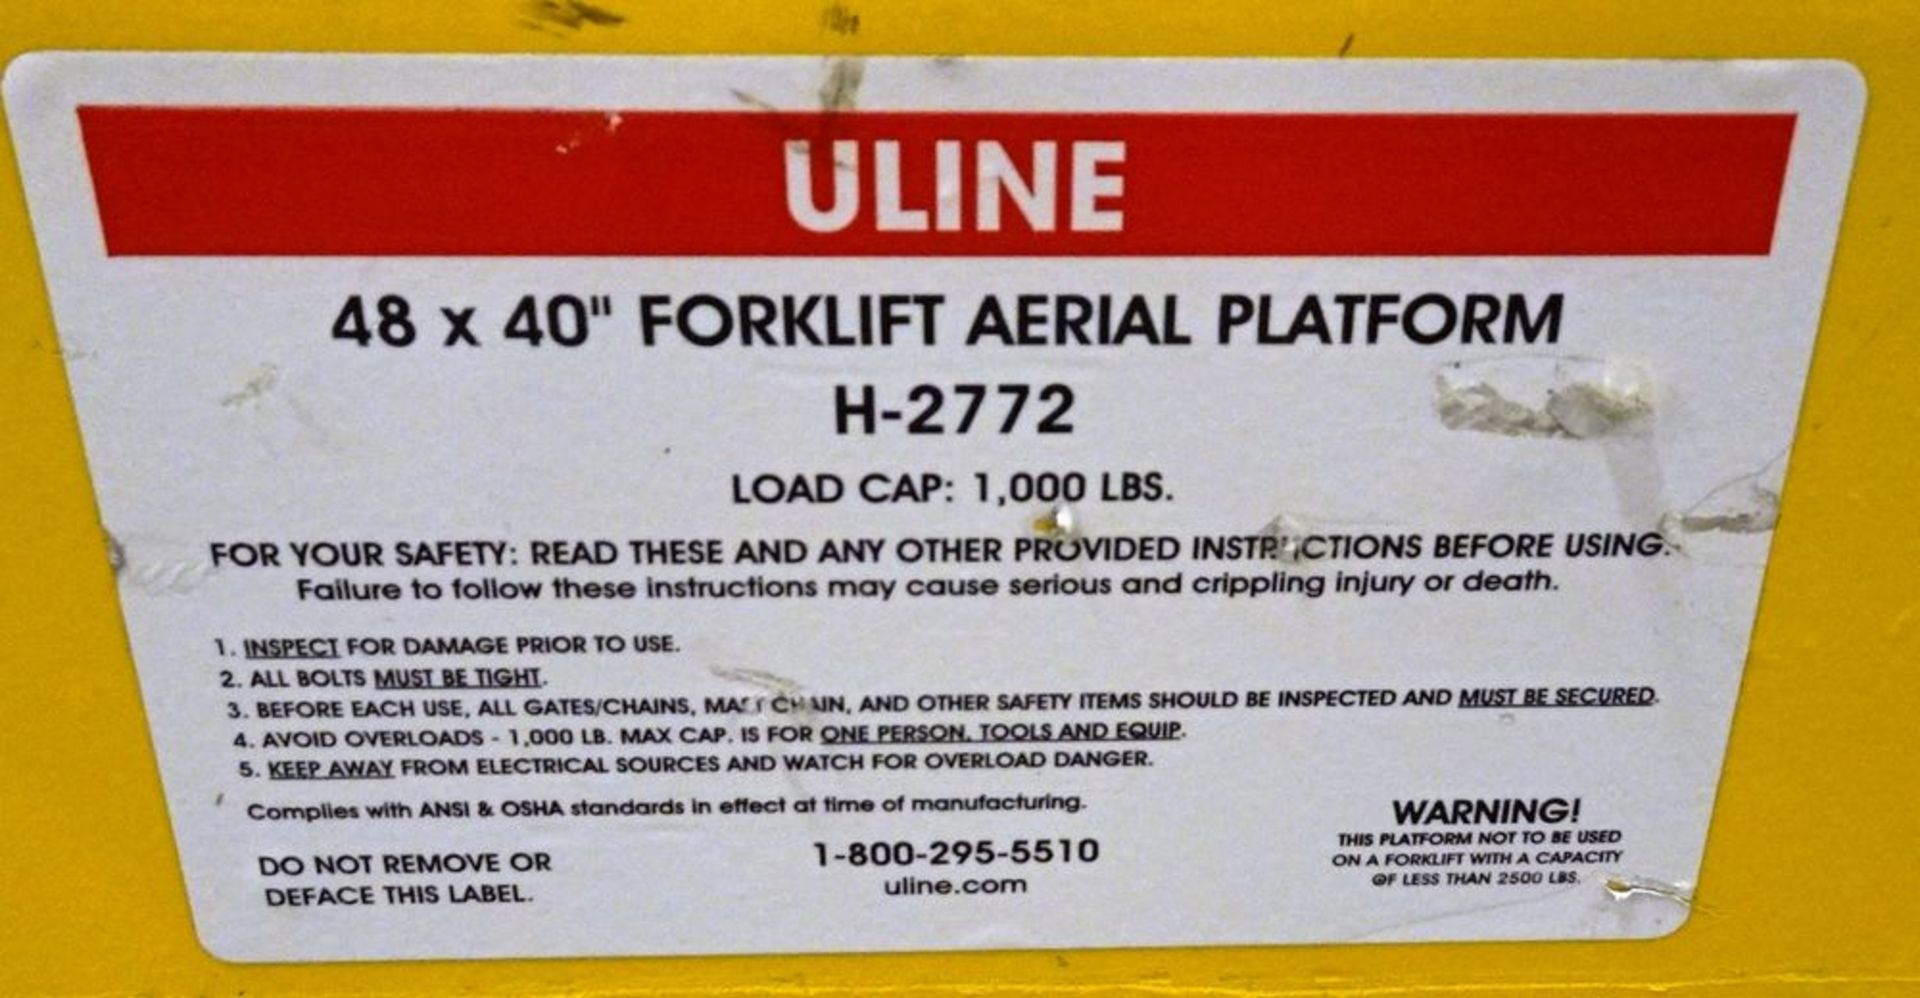 ULINE MODEL H-2772 FORKLIFT AERIAL PLATFORM, 40" X 48", 1,000 LBS CAPACITY - Image 3 of 3